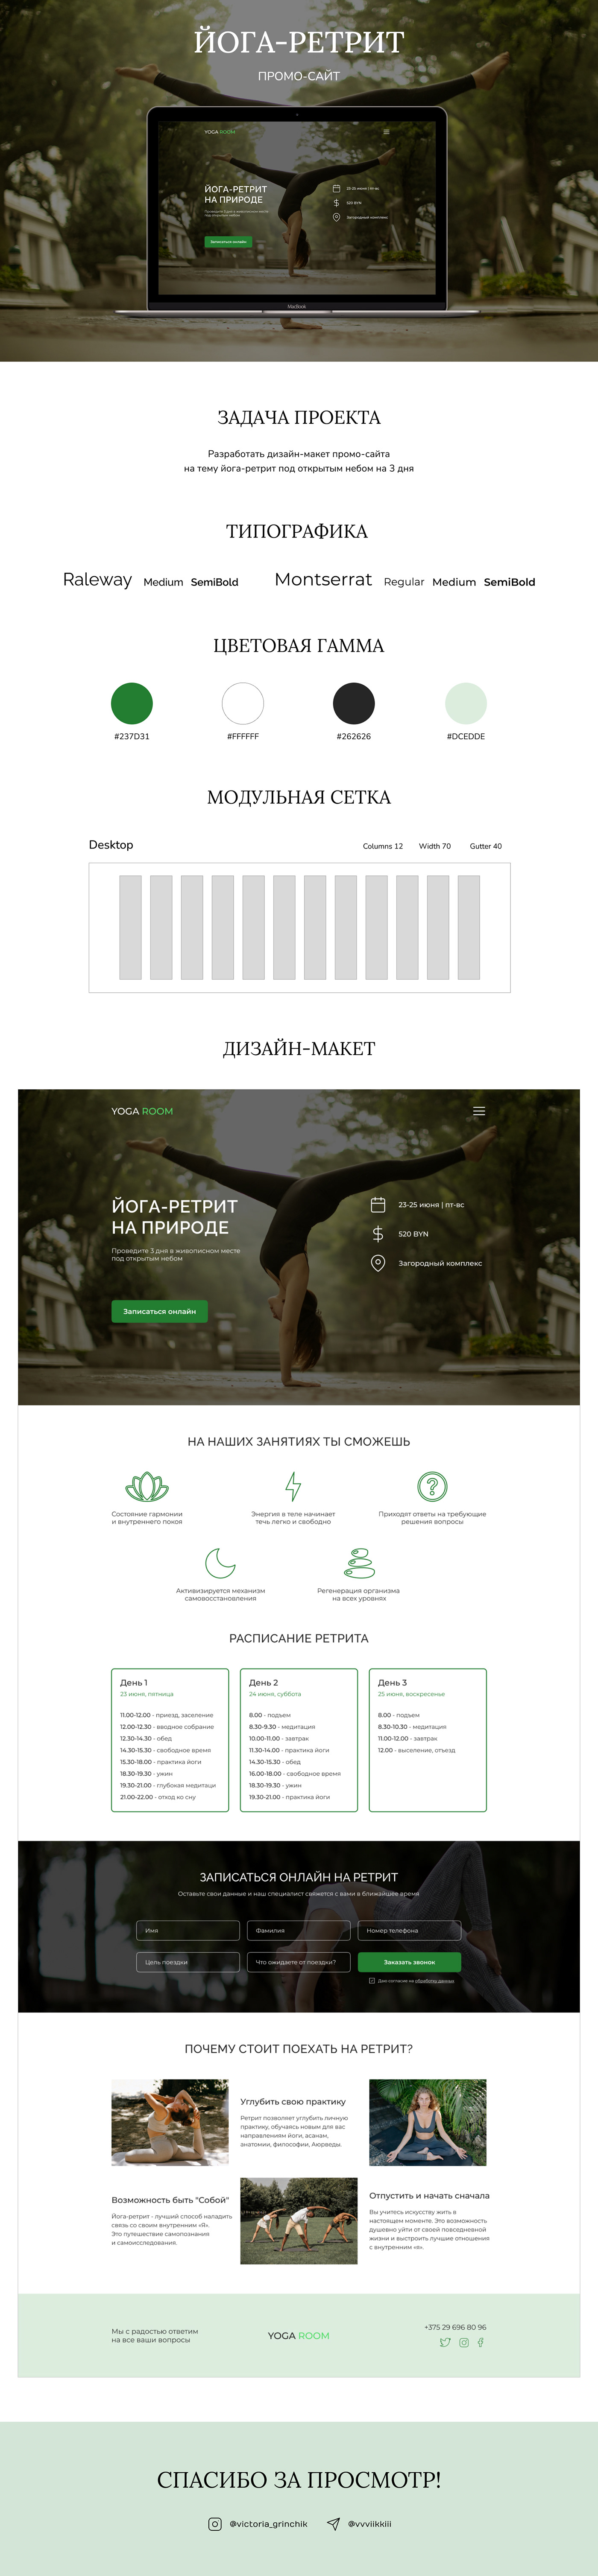 Yoga retreat promo website